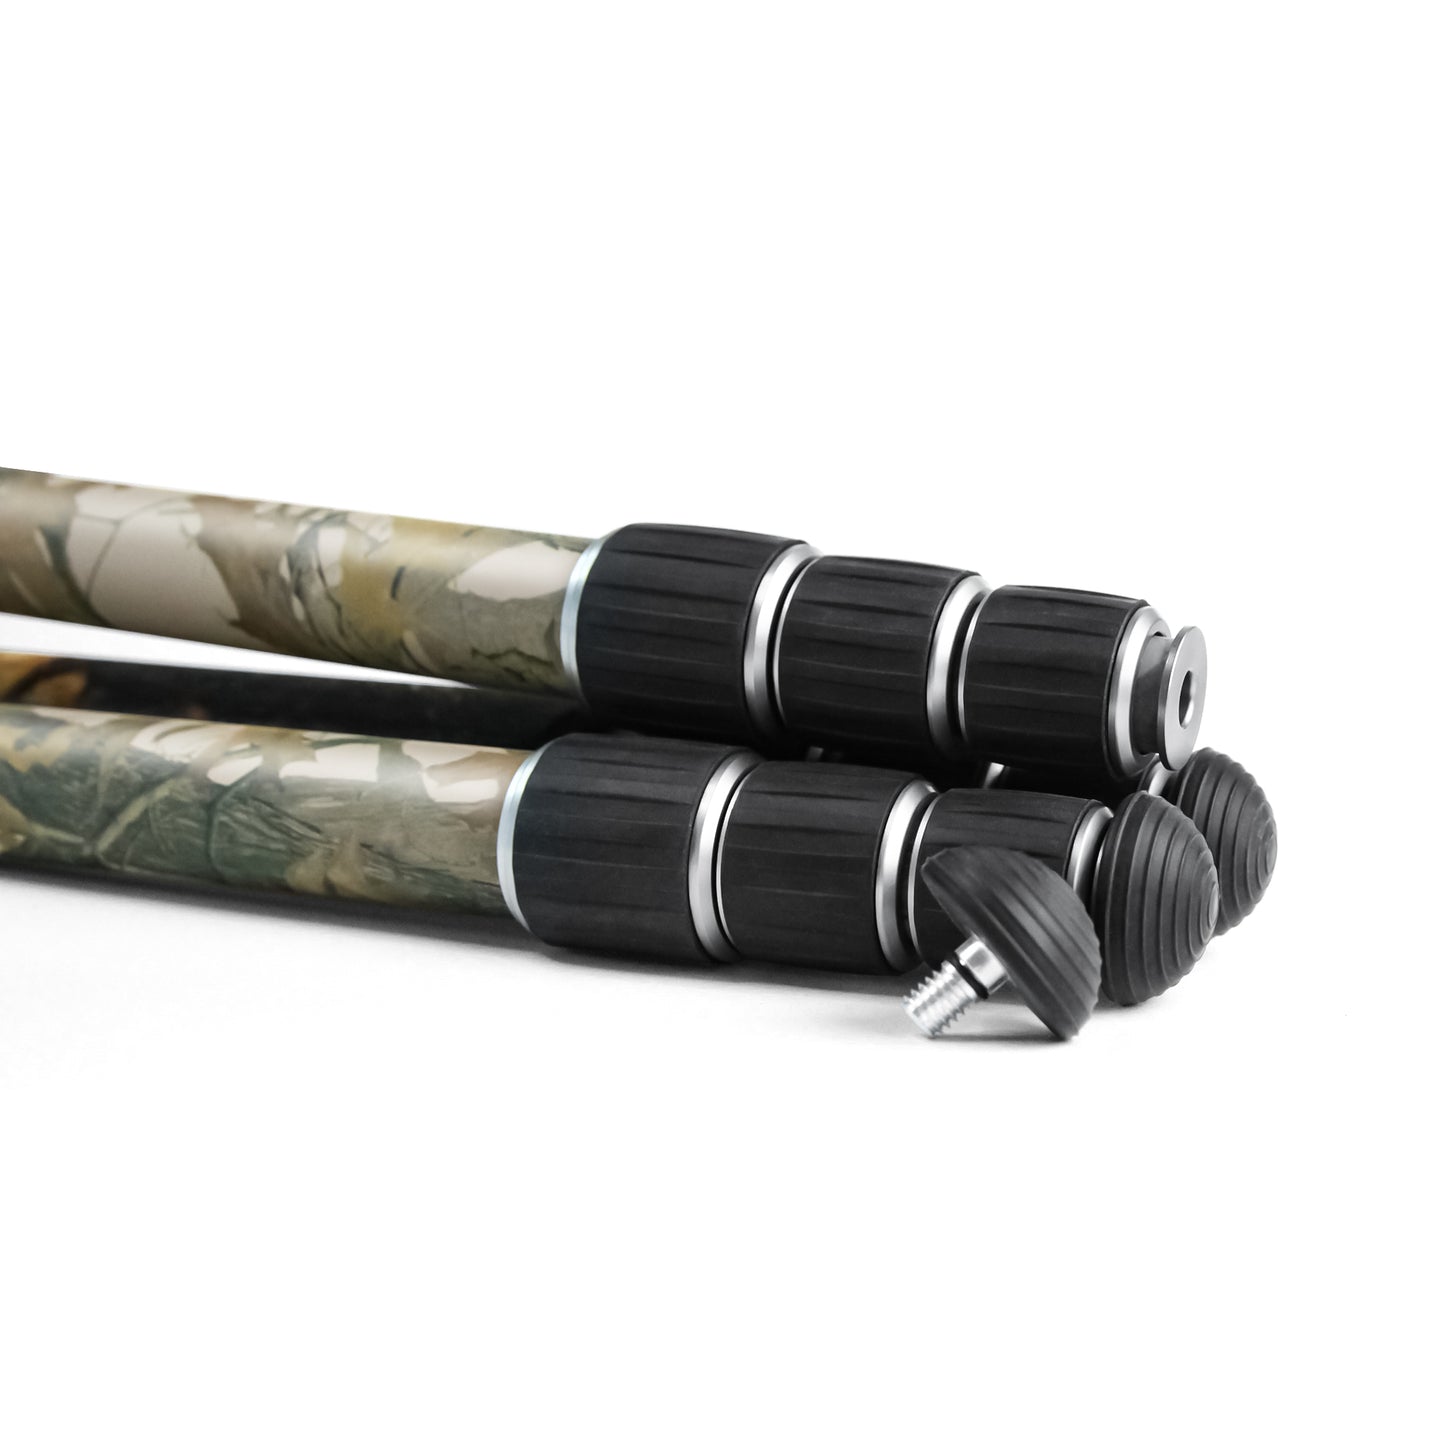 Kingjoy C85M camouflage carbon fiber tripod-4 section, bird shooting, wildlife photography